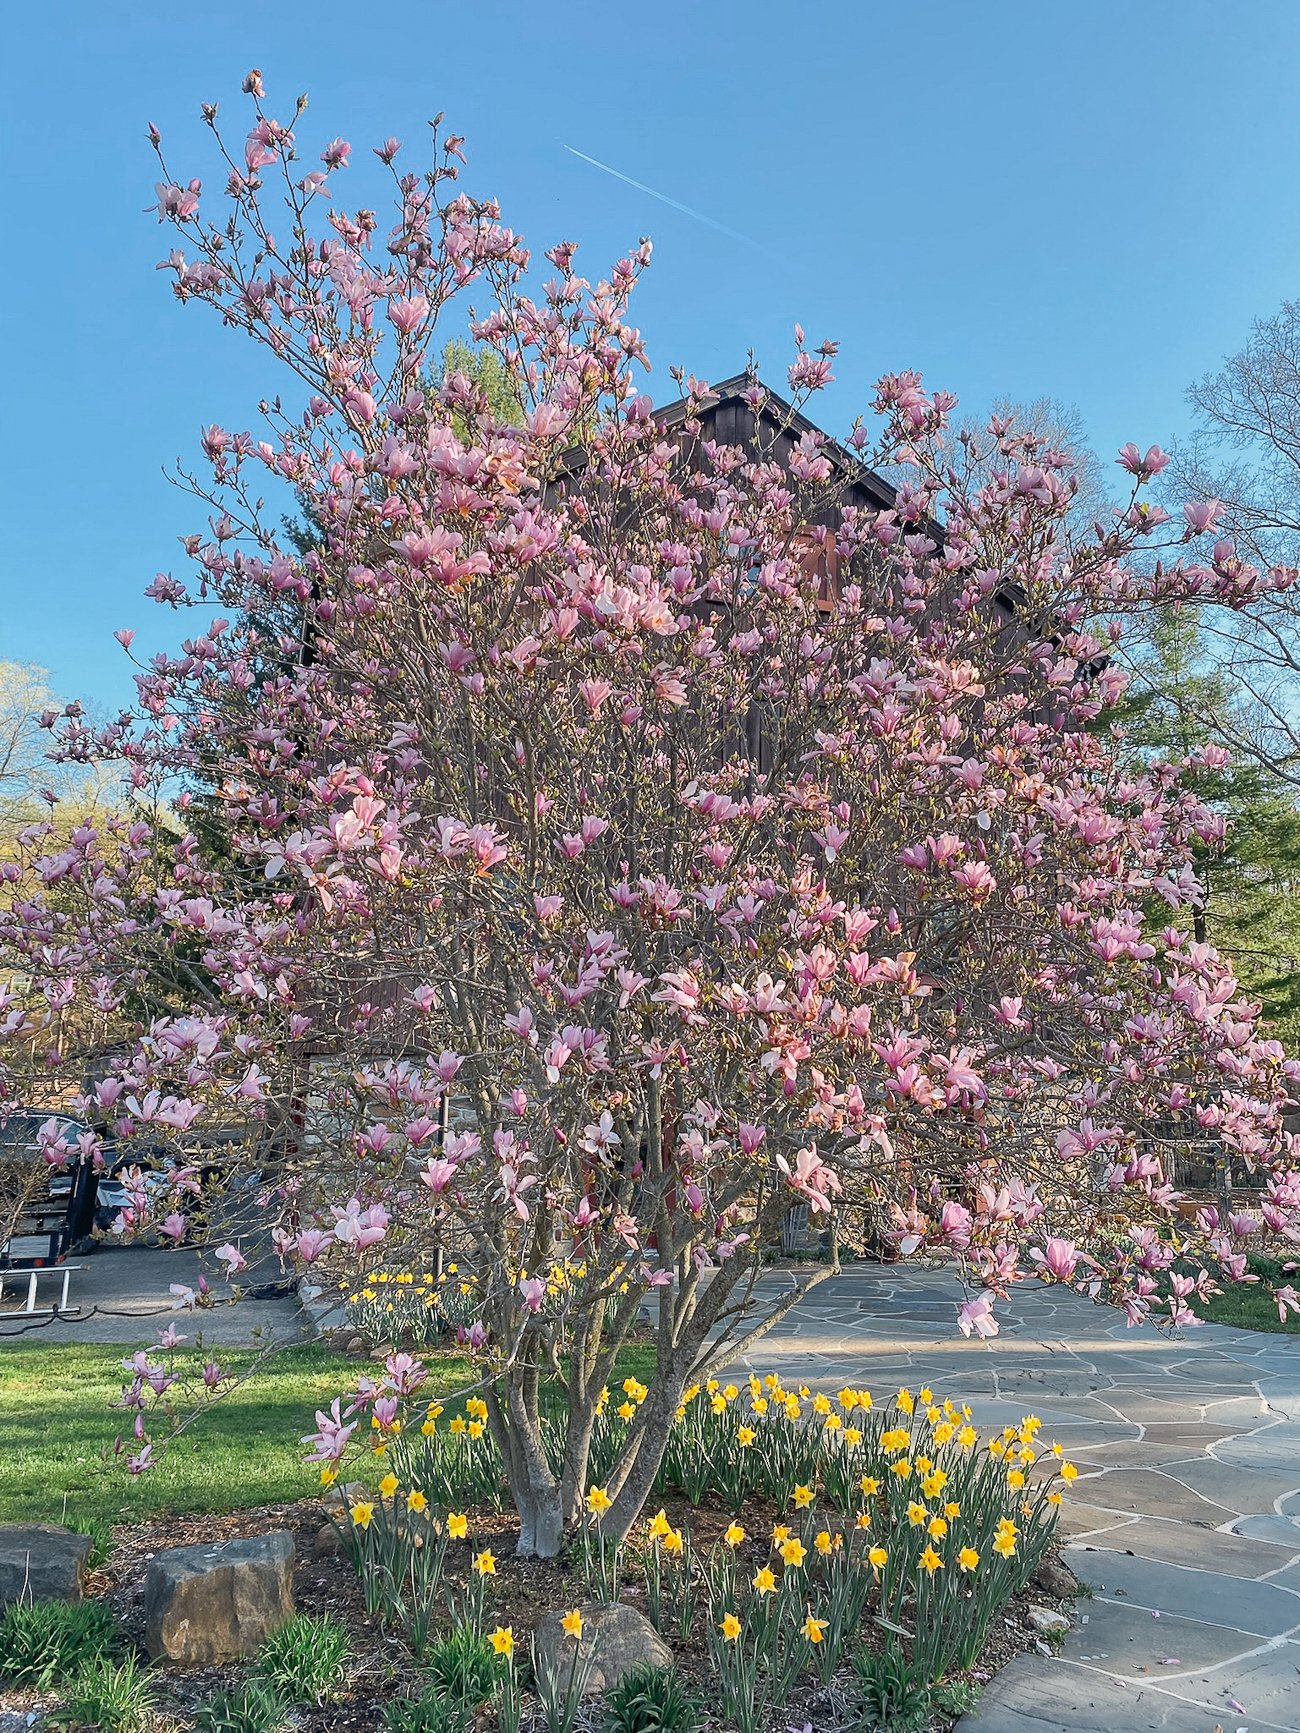 magnolia tree with daffodils underneath